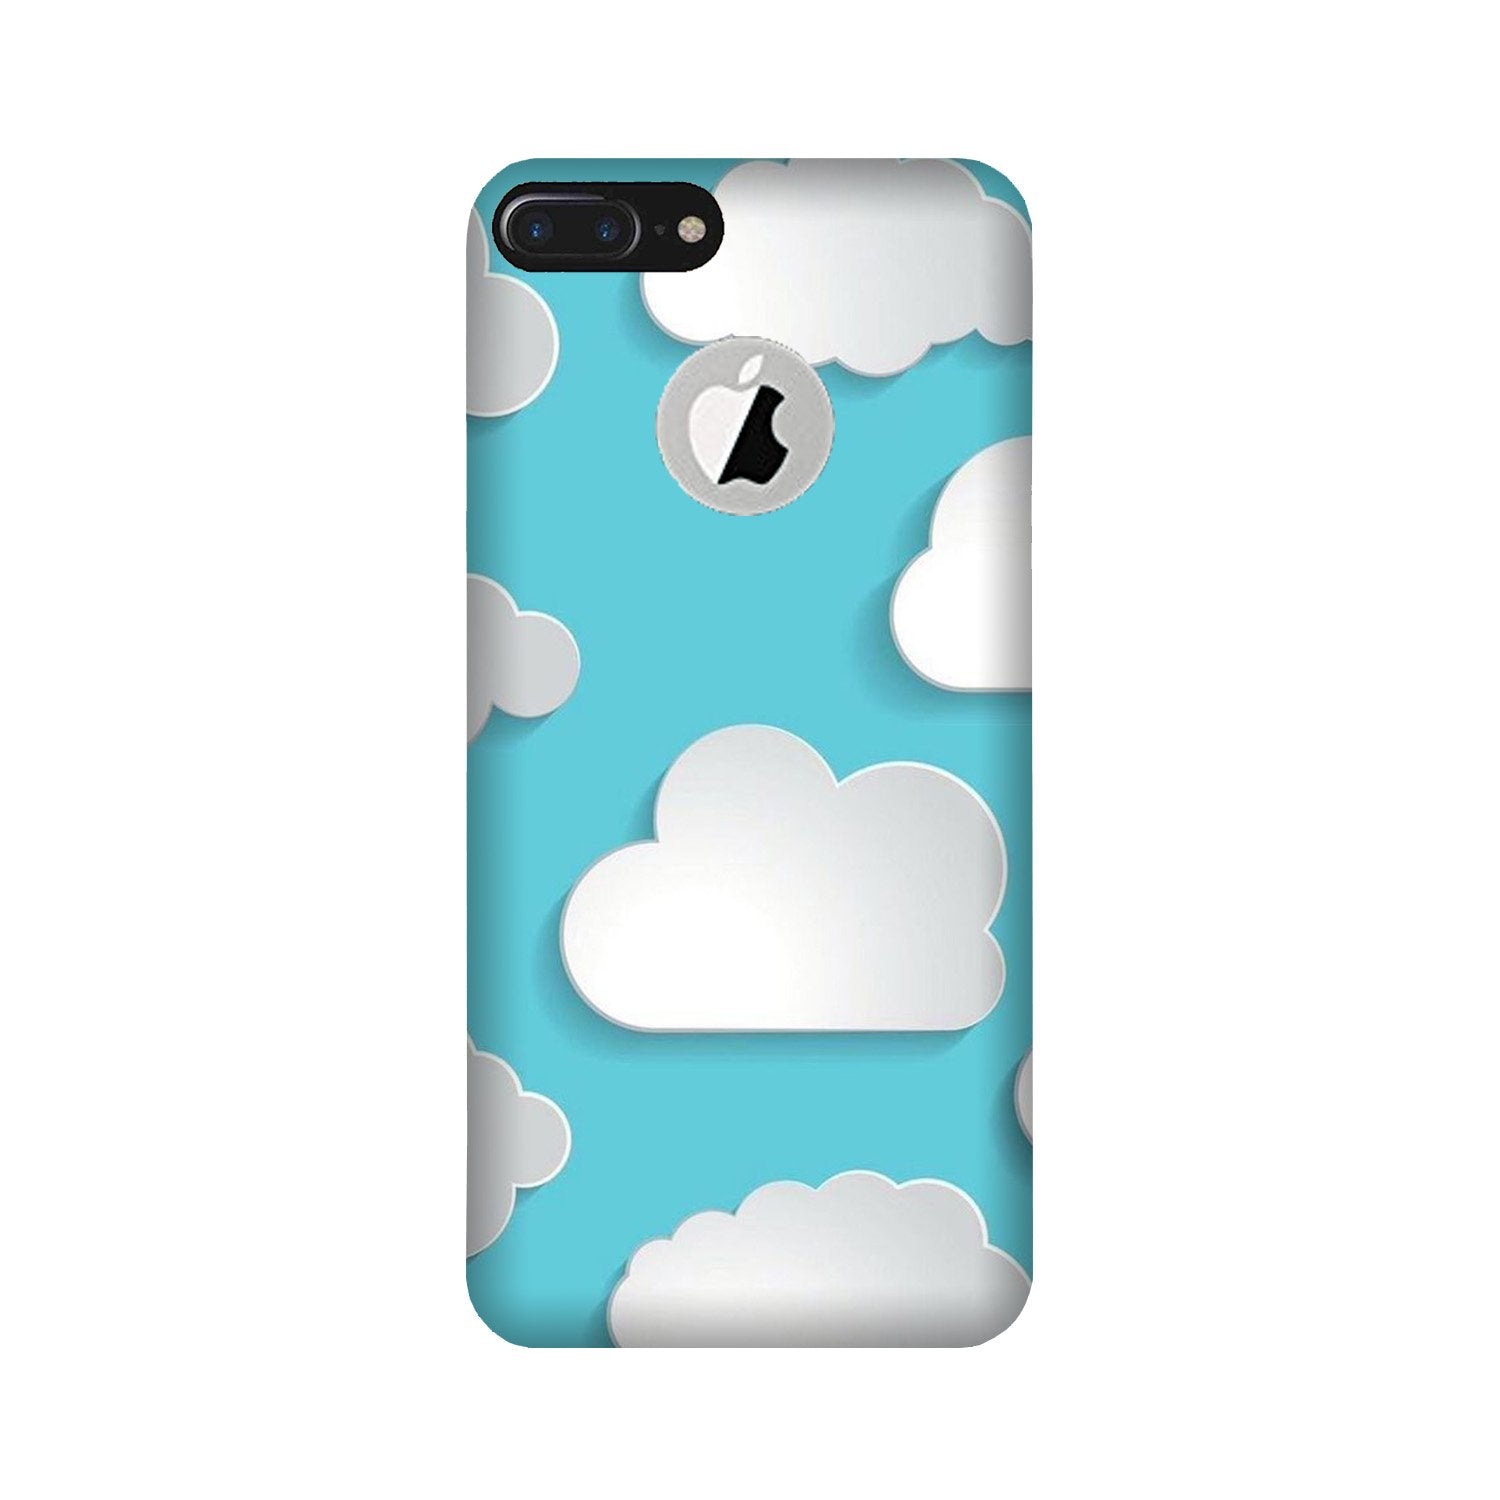 Clouds Case for iPhone 7 Plus logo cut (Design No. 210)